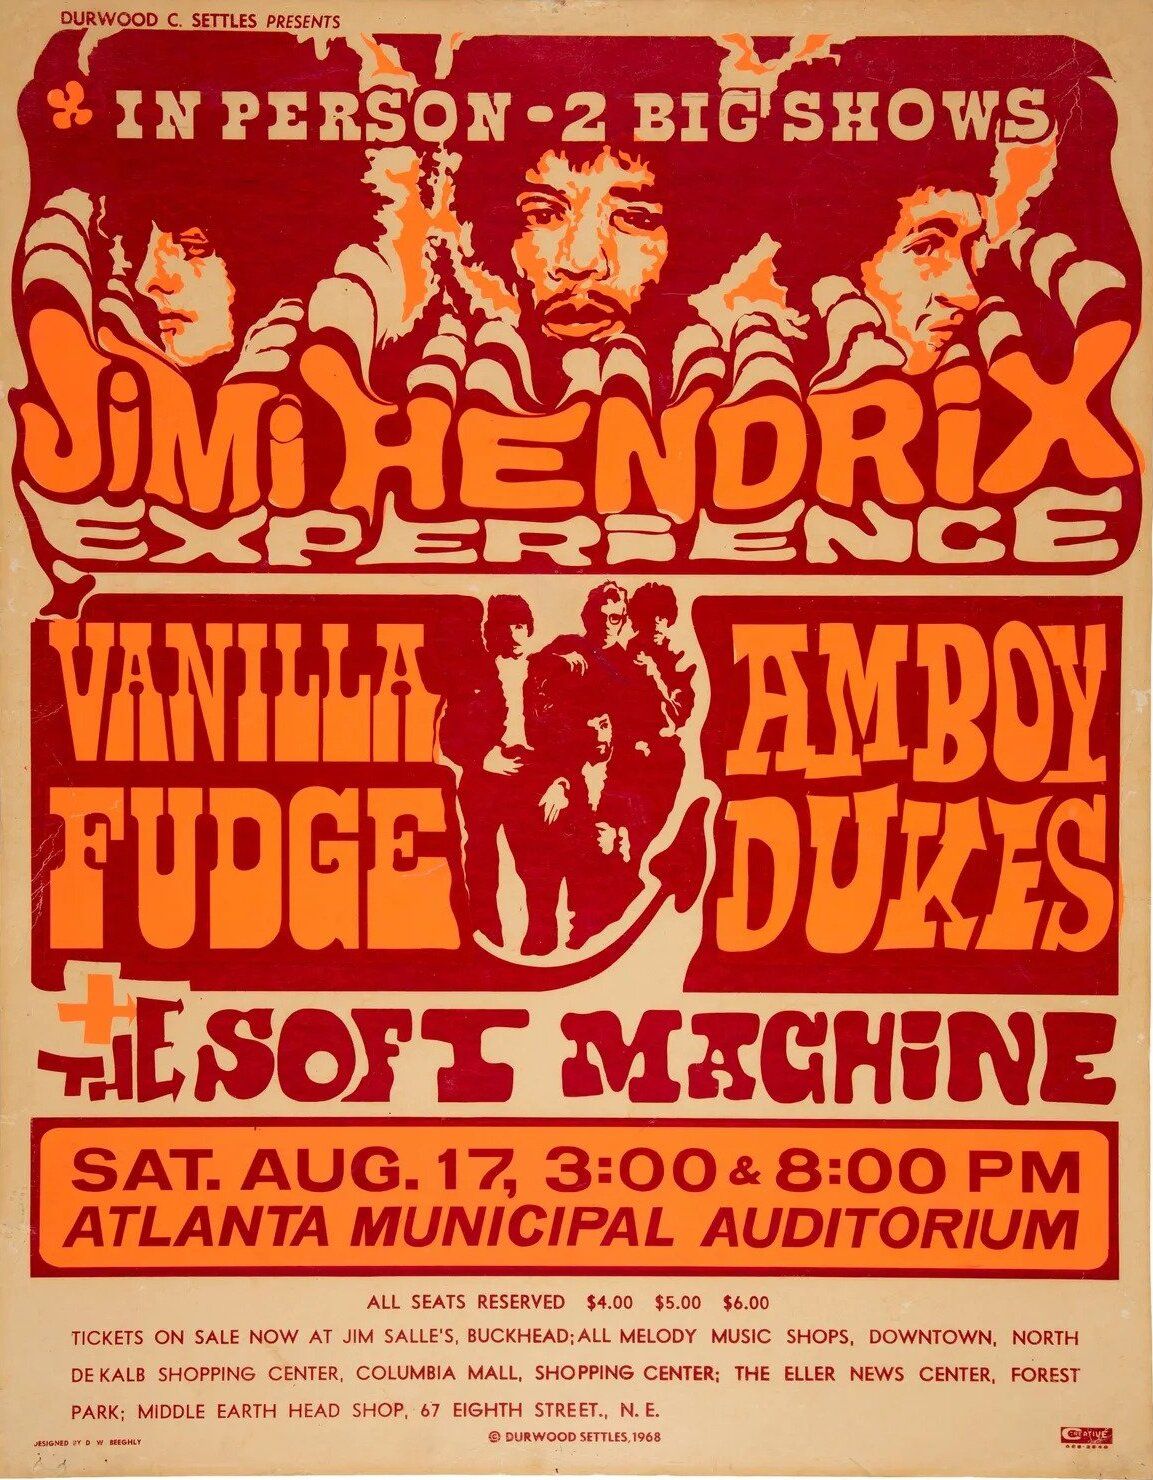 1968-Atlanta Municipal Auditorium-Jimi Hendrix Experience Concert Poster